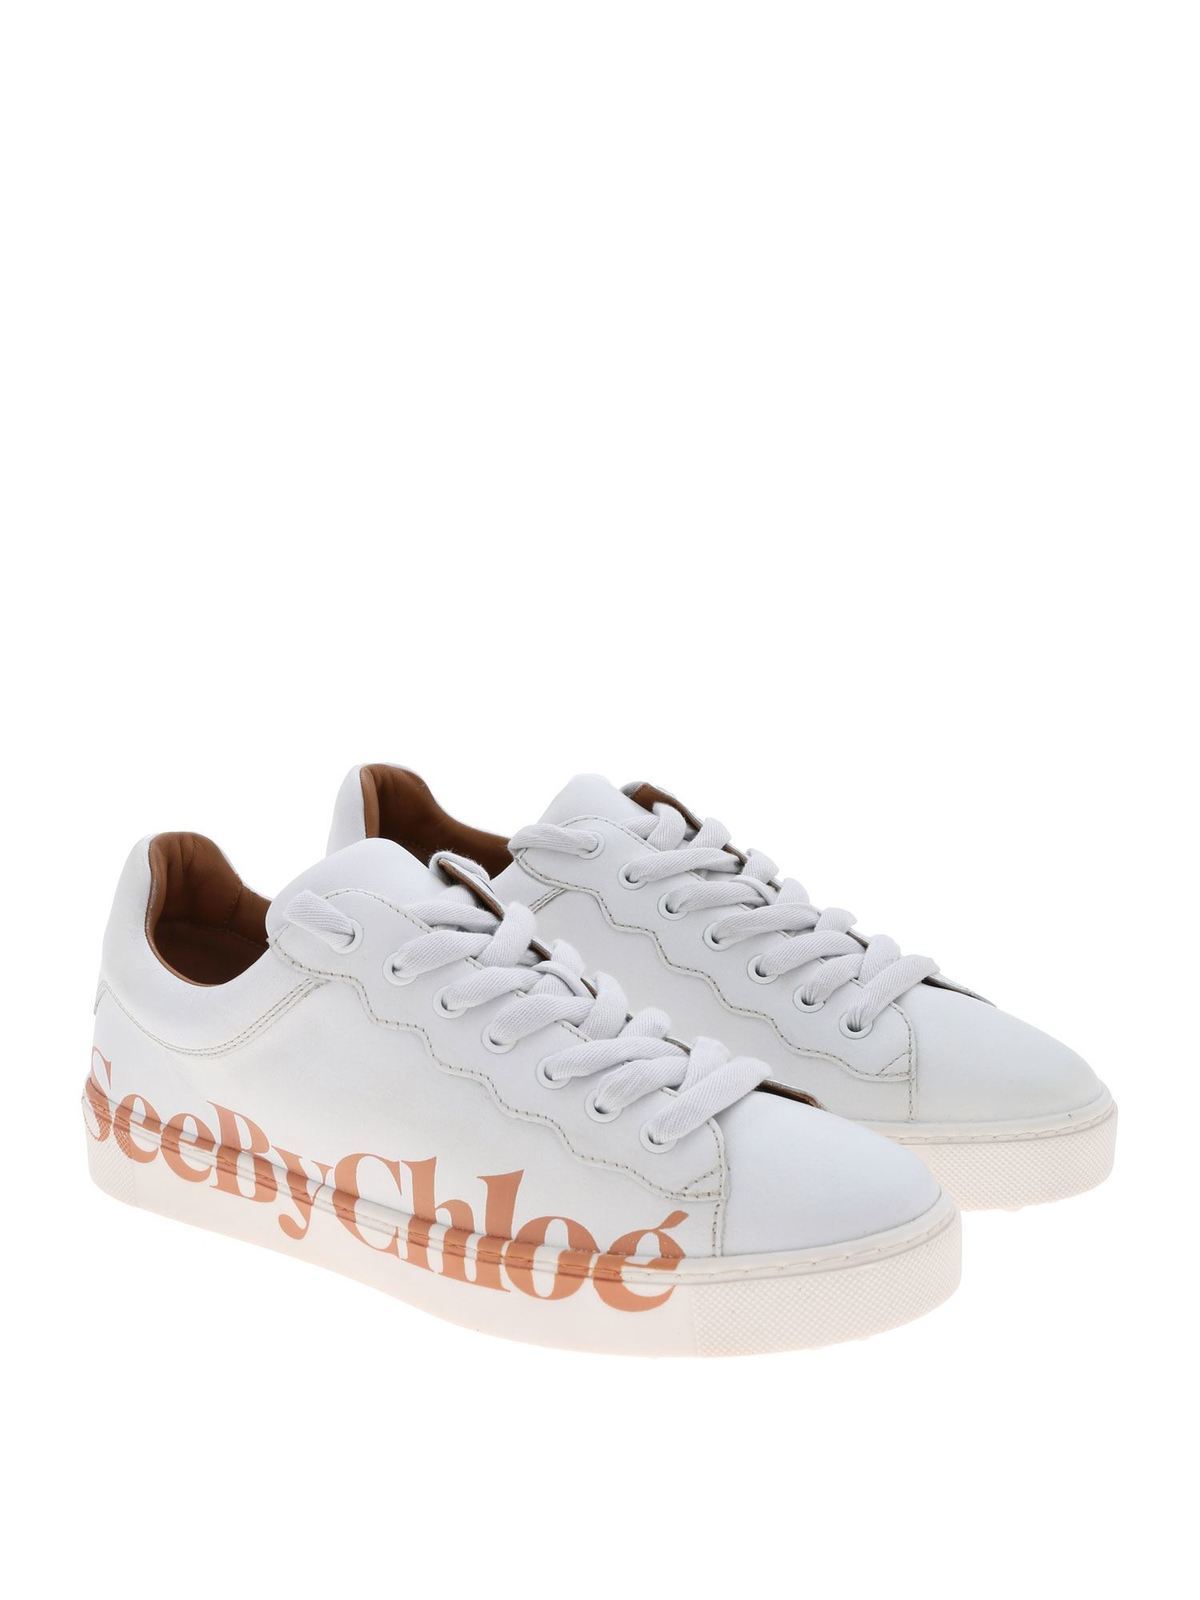 chloe trainers white